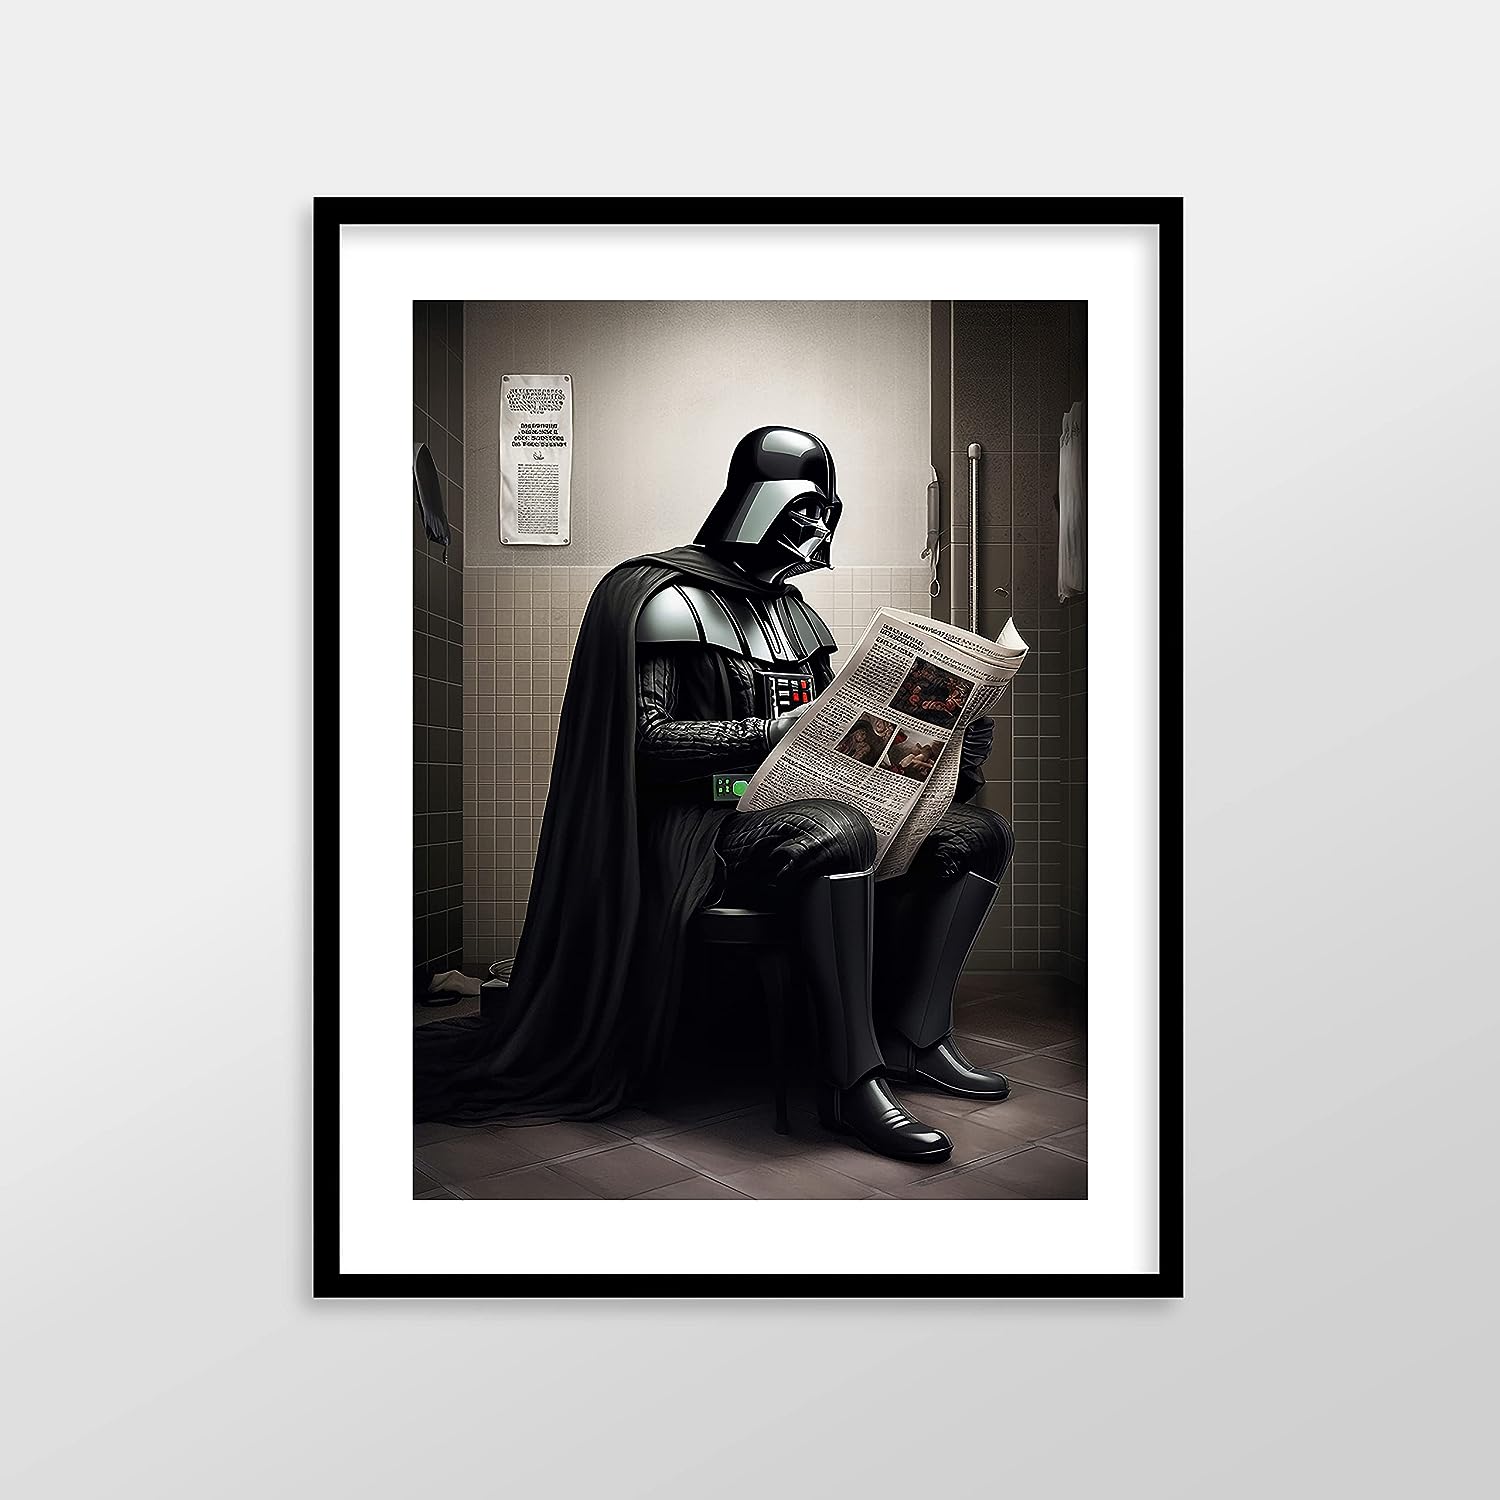 Star Wars Bathroom Décor Art Print - Premium Giclee Fine Art Print - Aesthetic Modern Vintage Painting Style Darth Vader Stormtrooper Yoda Print Poster for Bathroom Wall Decor, Ready to Frame